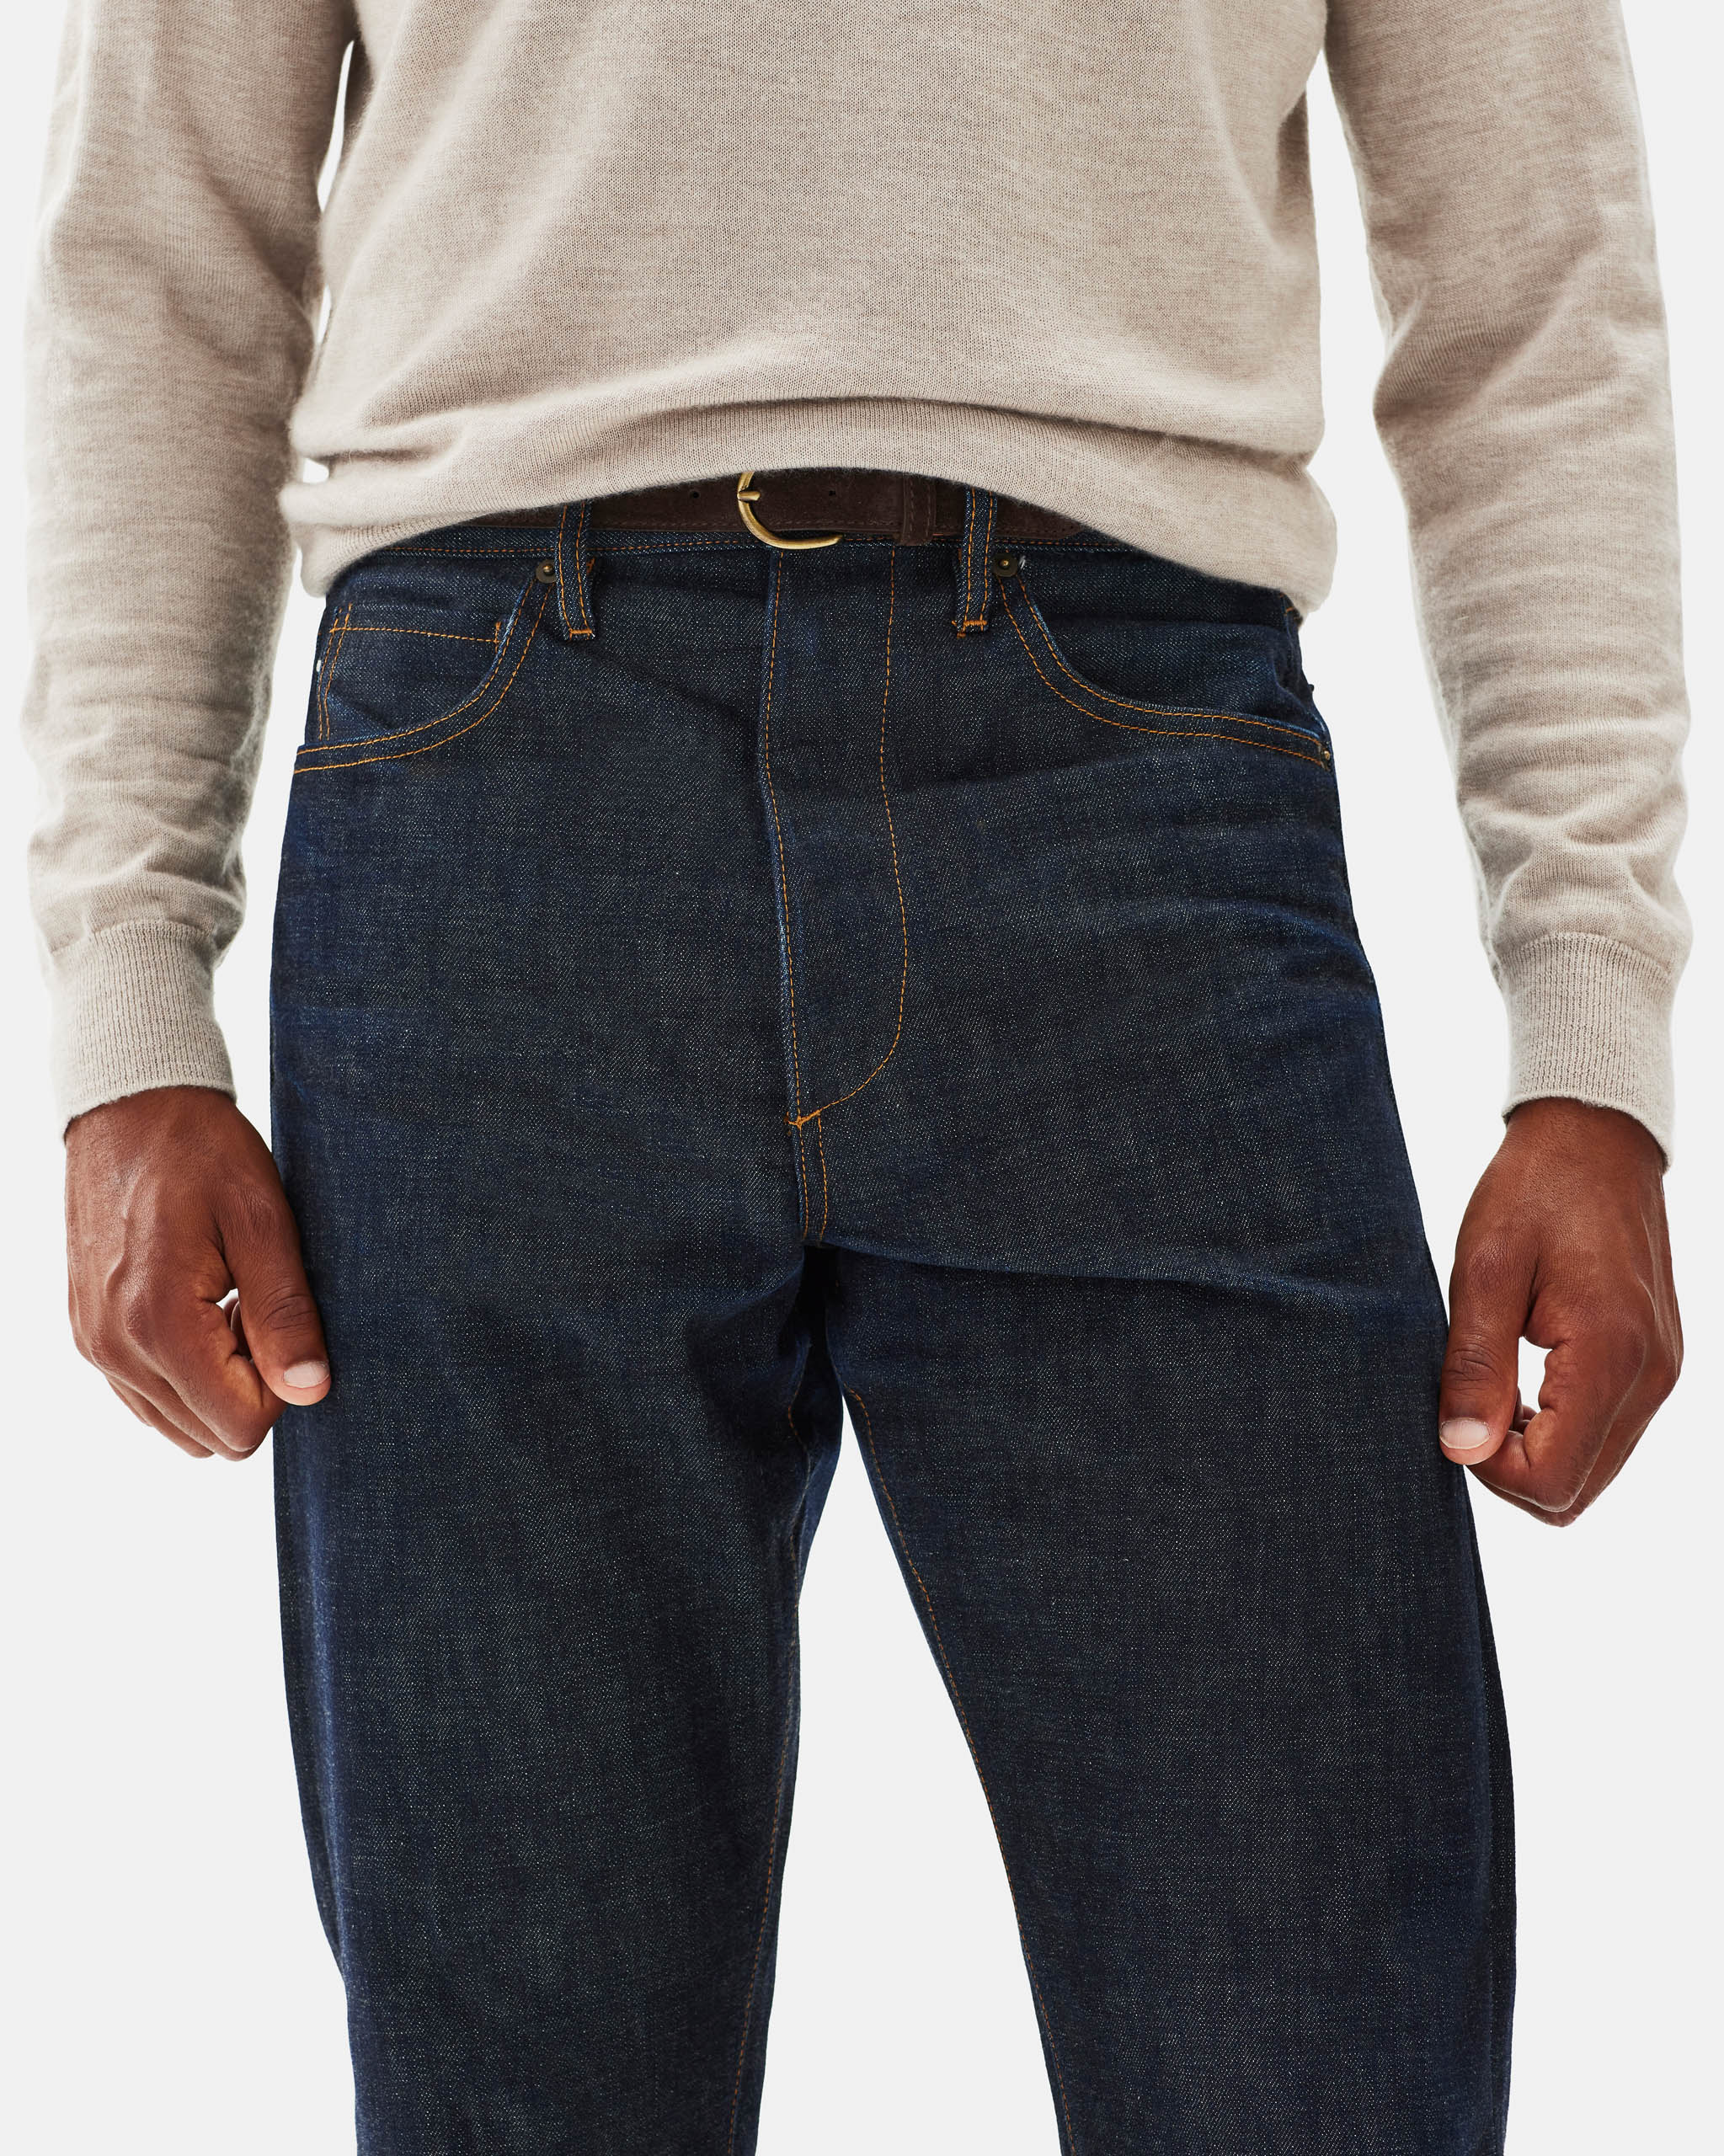 Jeans raw denim 14oz selvedge image 2